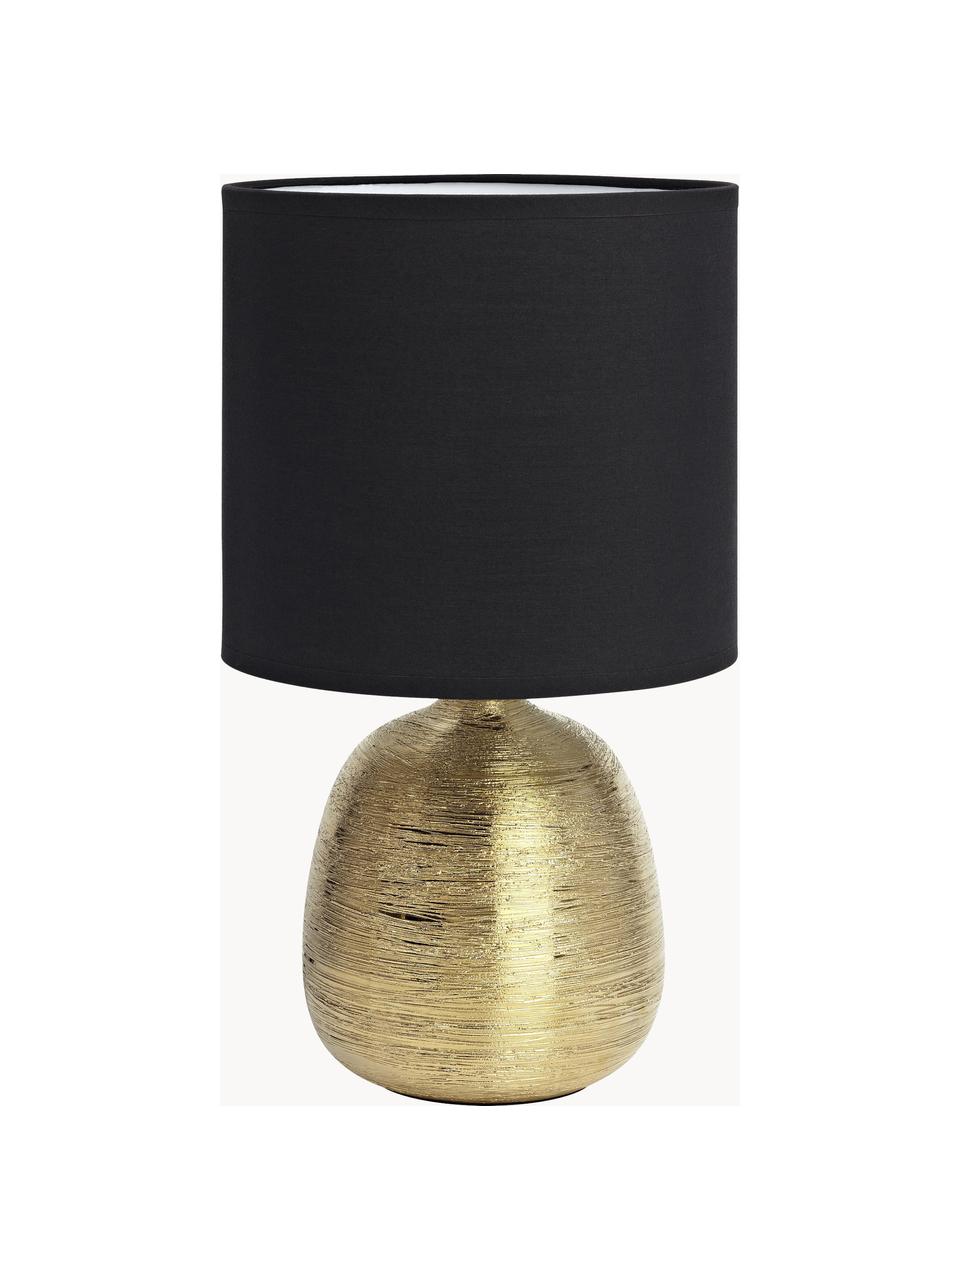 Keramik-Tischlampe Oscar, Schwarz, Goldfarben, Ø 20 x H 39 cm